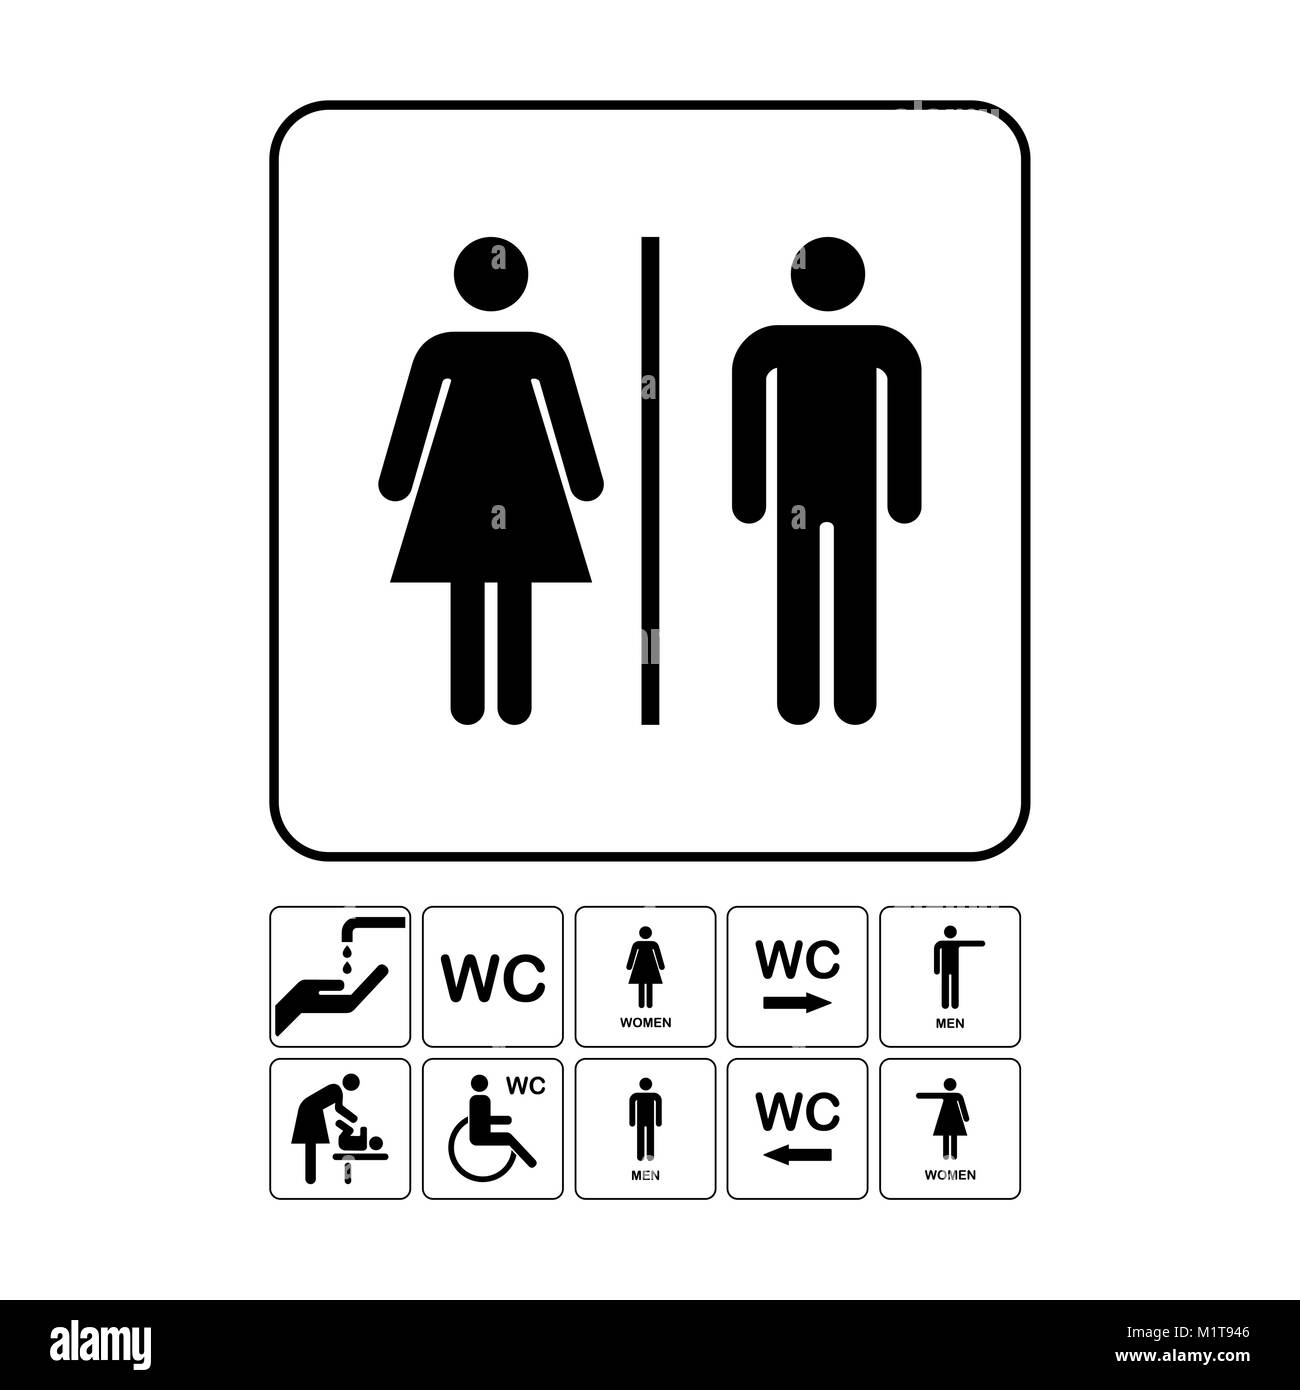 WC Toilet door plate icon. Simple bathroom plate. Stock Vector